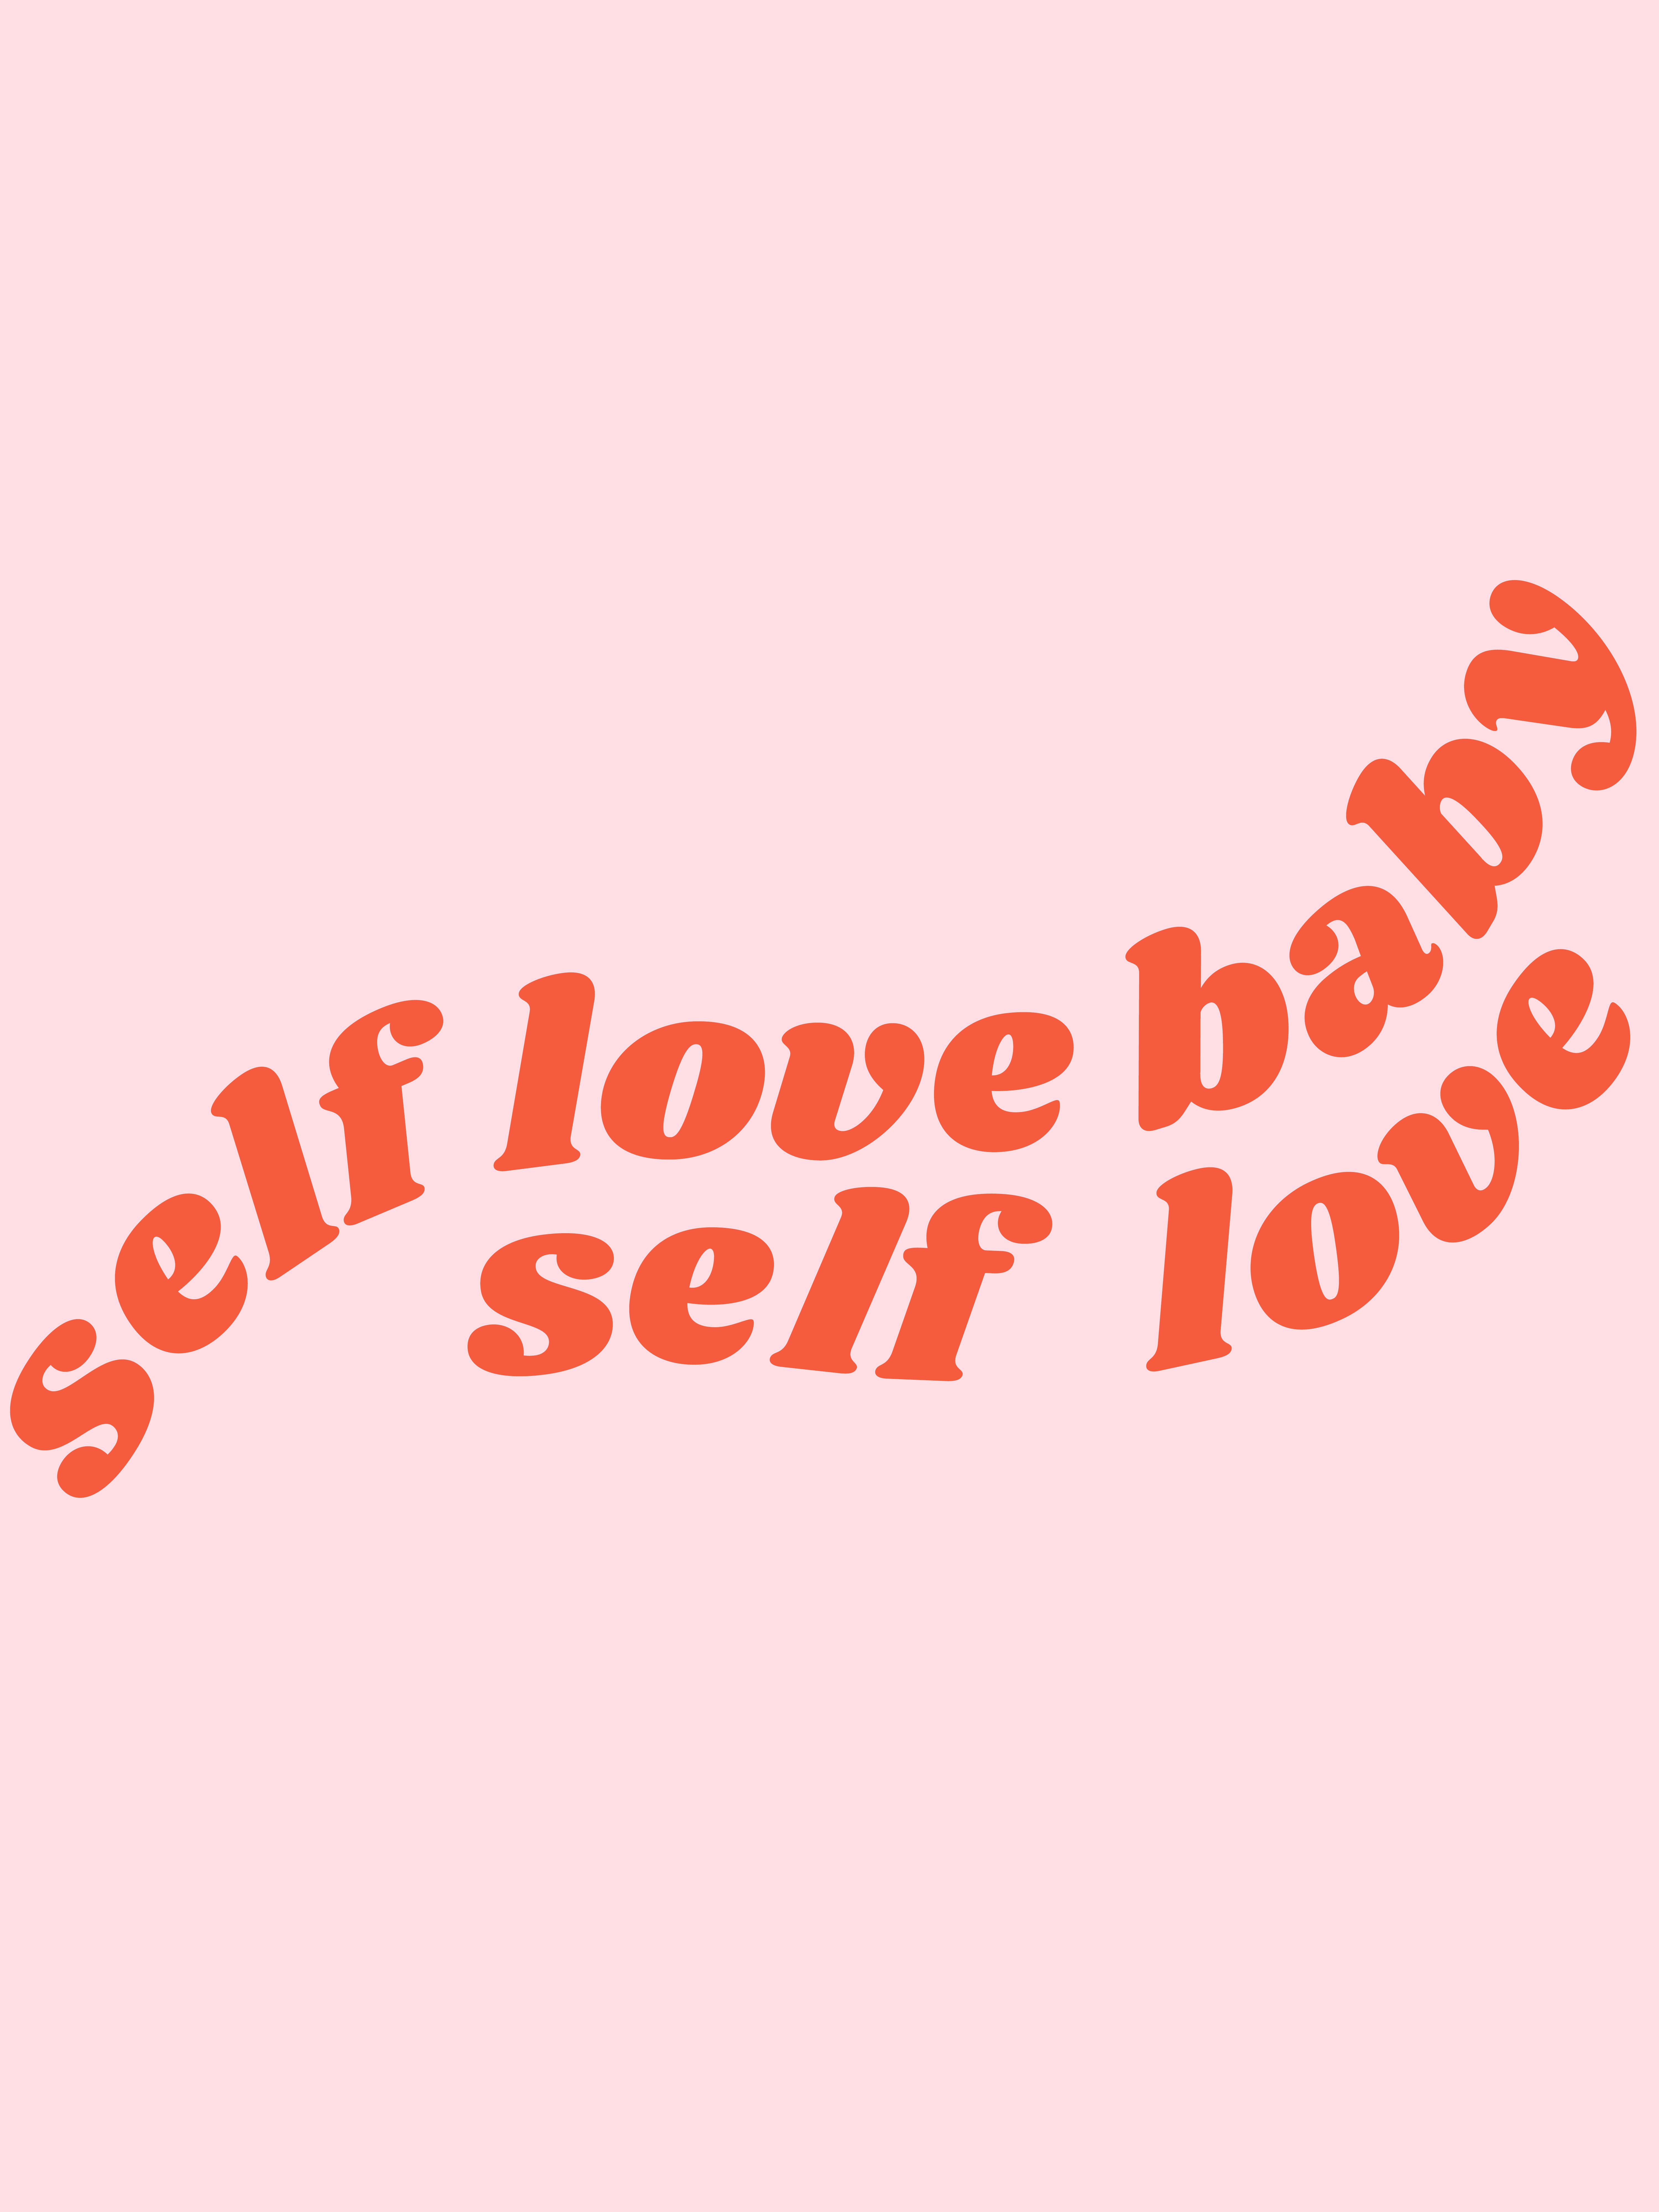 Self loving babe